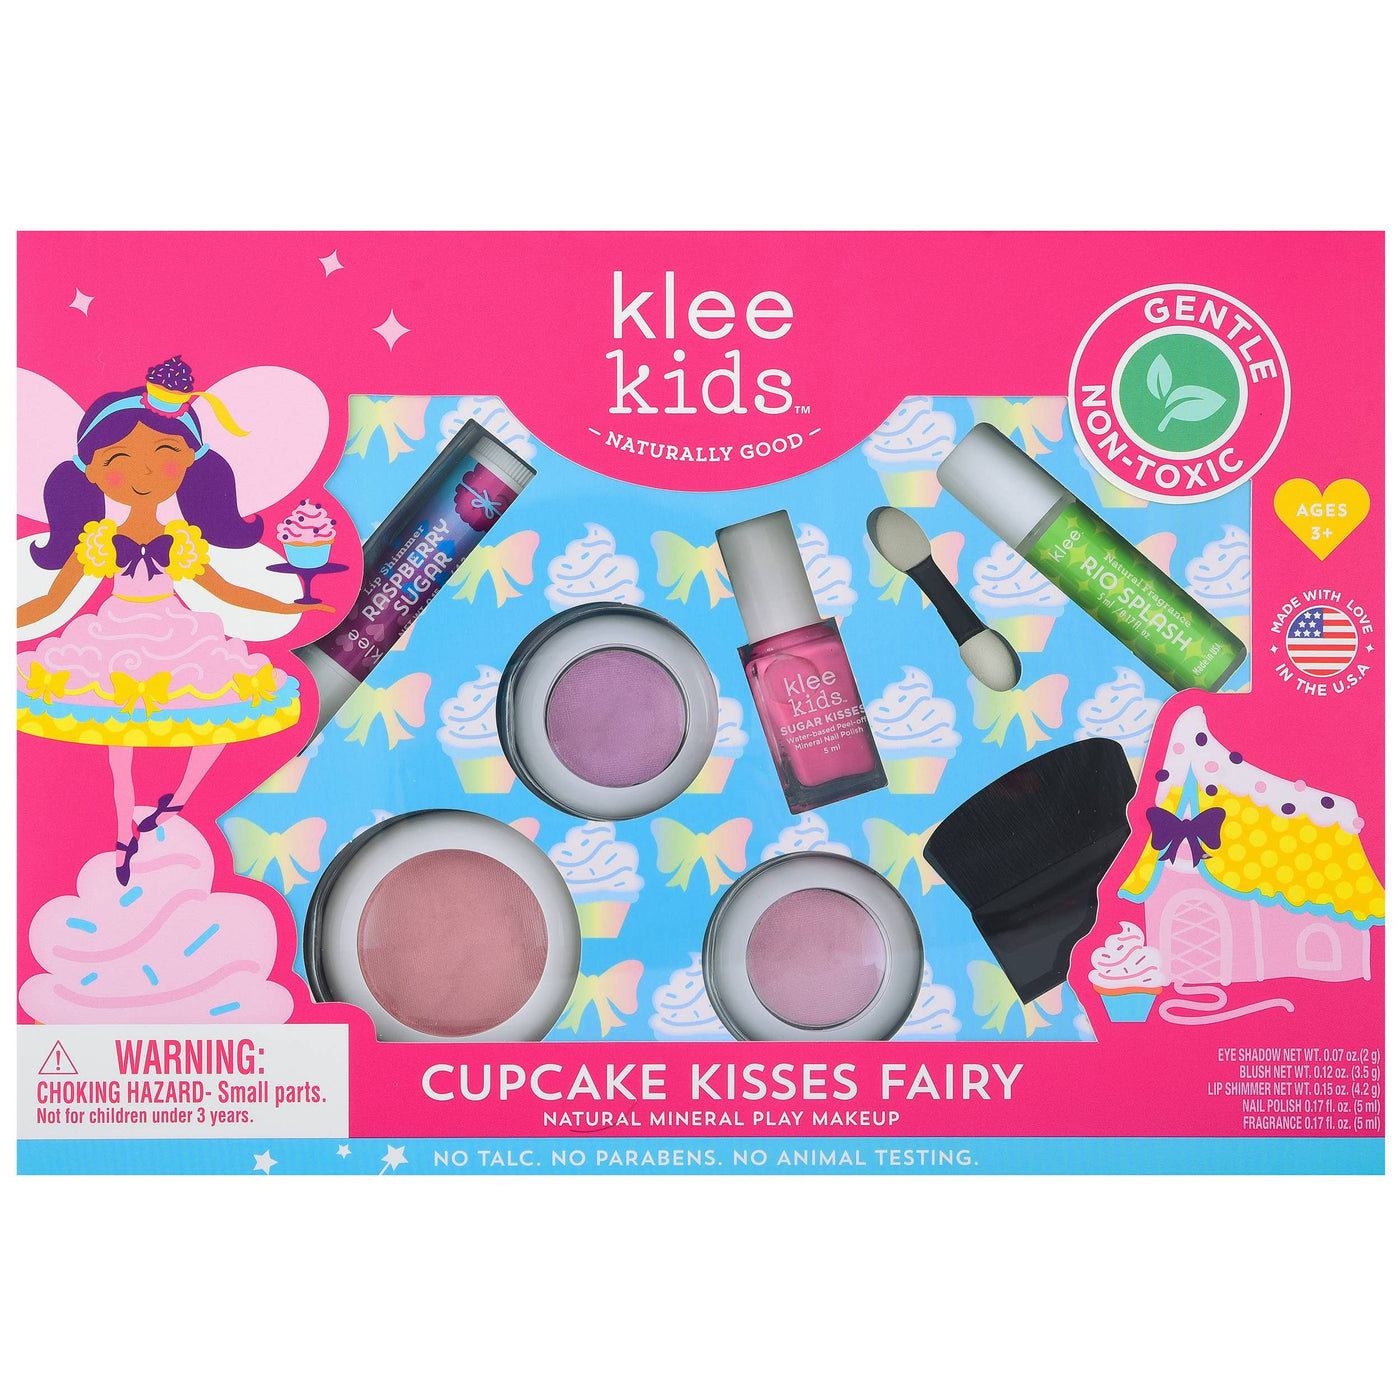 Klee Naturals - NEW! Cupcake Kisses Fairy - Klee Kids Deluxe Makeup Kit